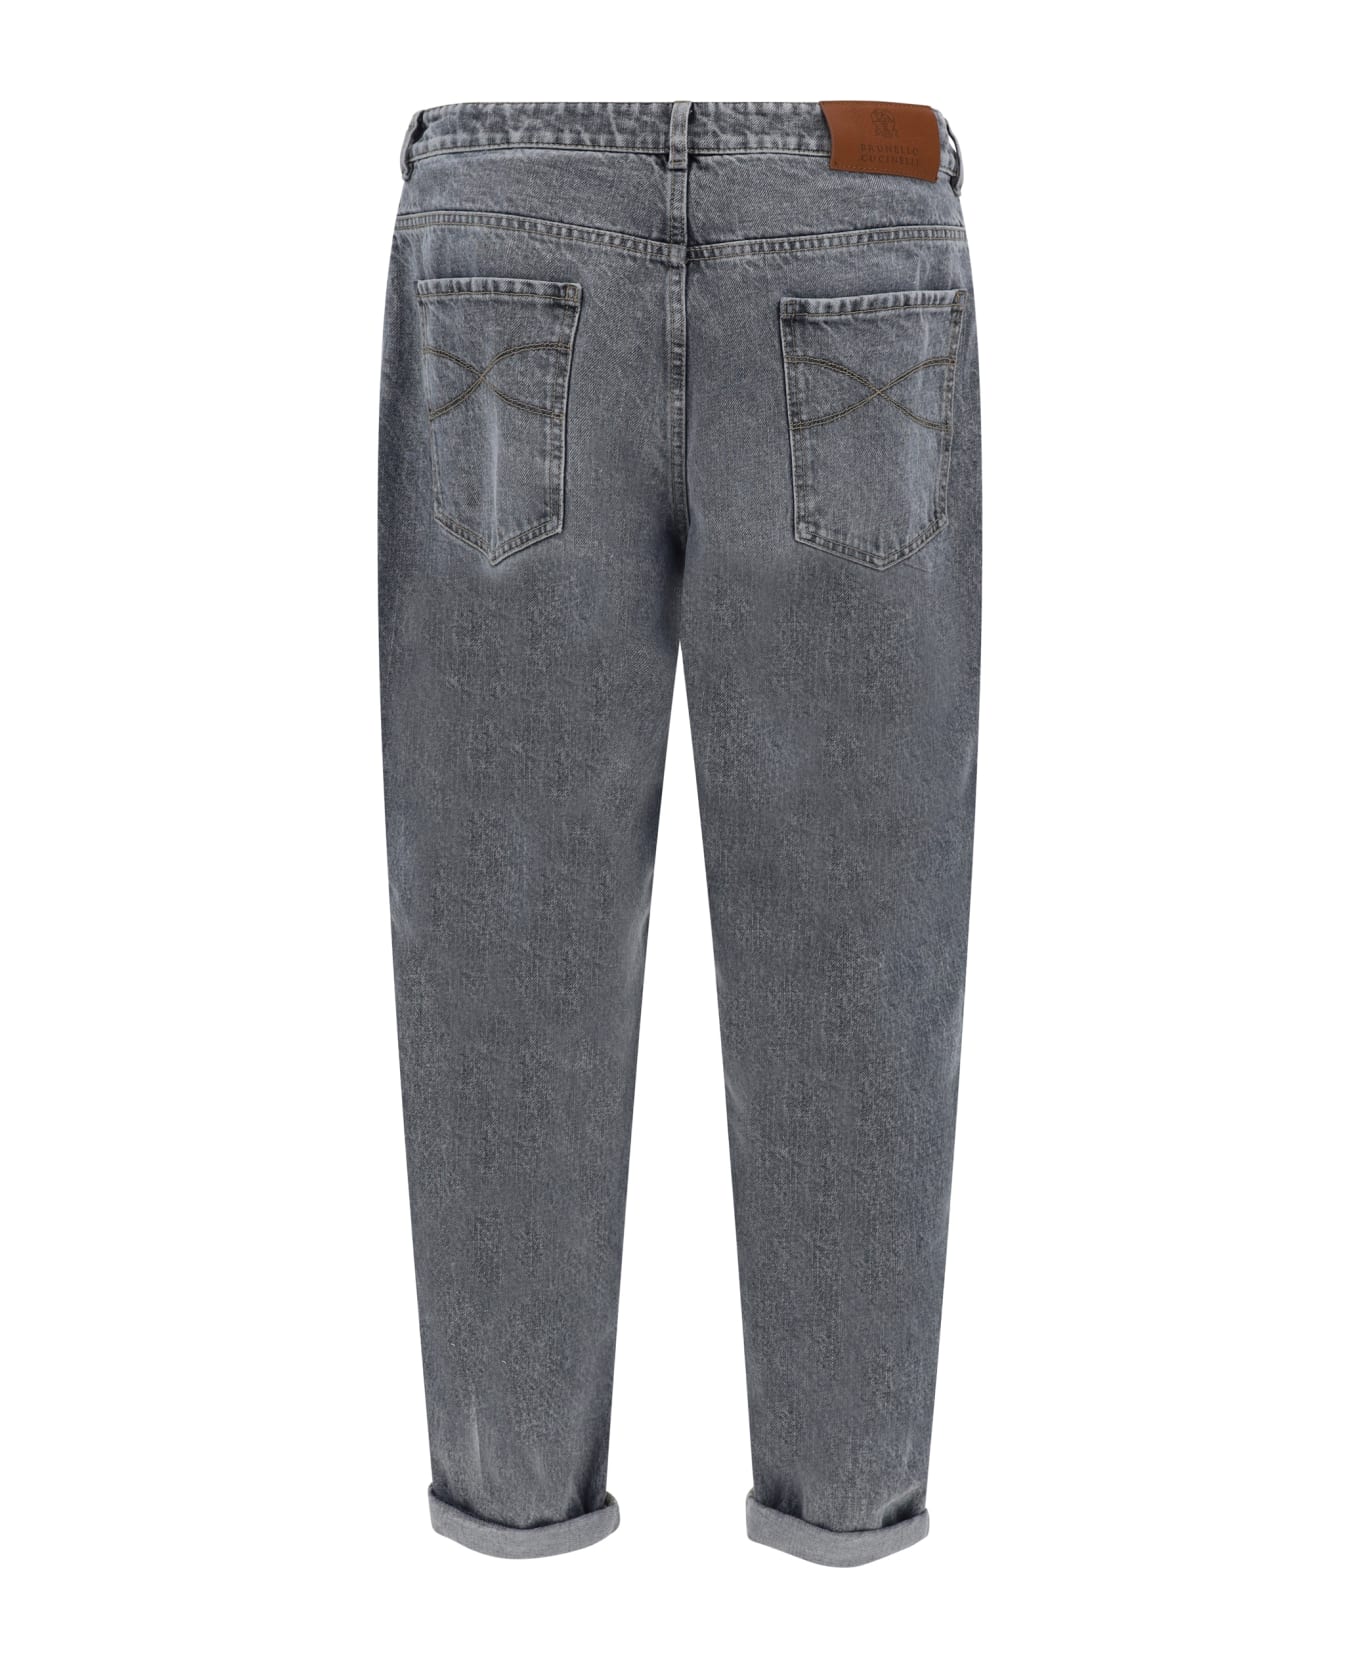 Brunello Cucinelli Jeans - C7827 デニム